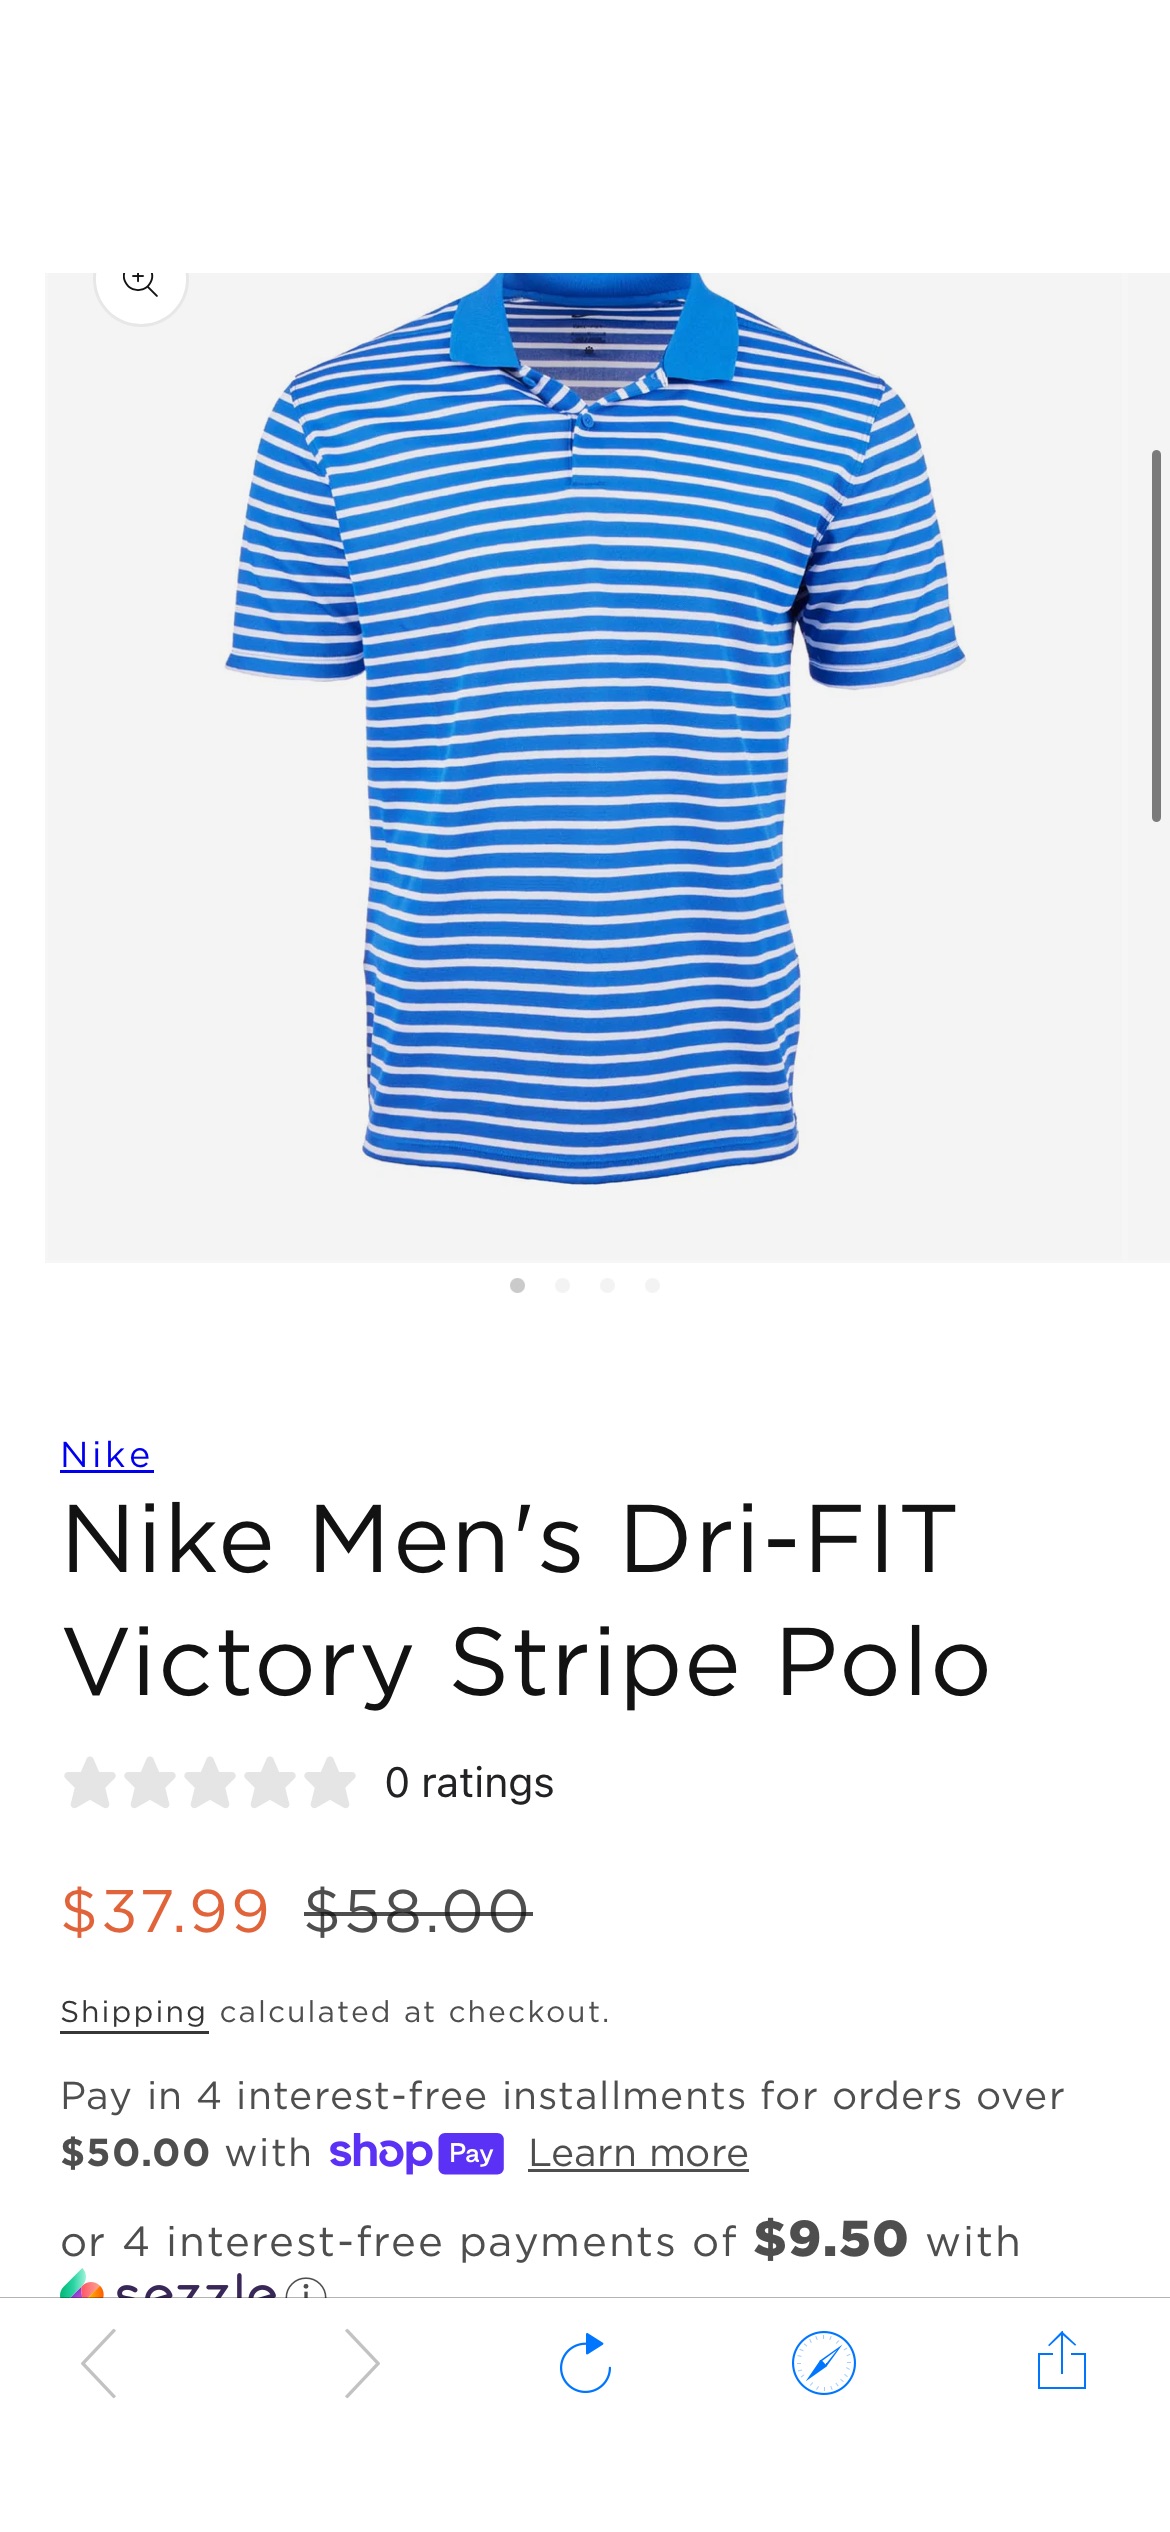 Nike Men's Dri-FIT Victory Stripe Polo – PROOZY Proozy：以24美元的价格在耐克的Dri-FIT Polo中像专业人士一样玩。今天提升你的游戏水平！

代码：PZR14VT